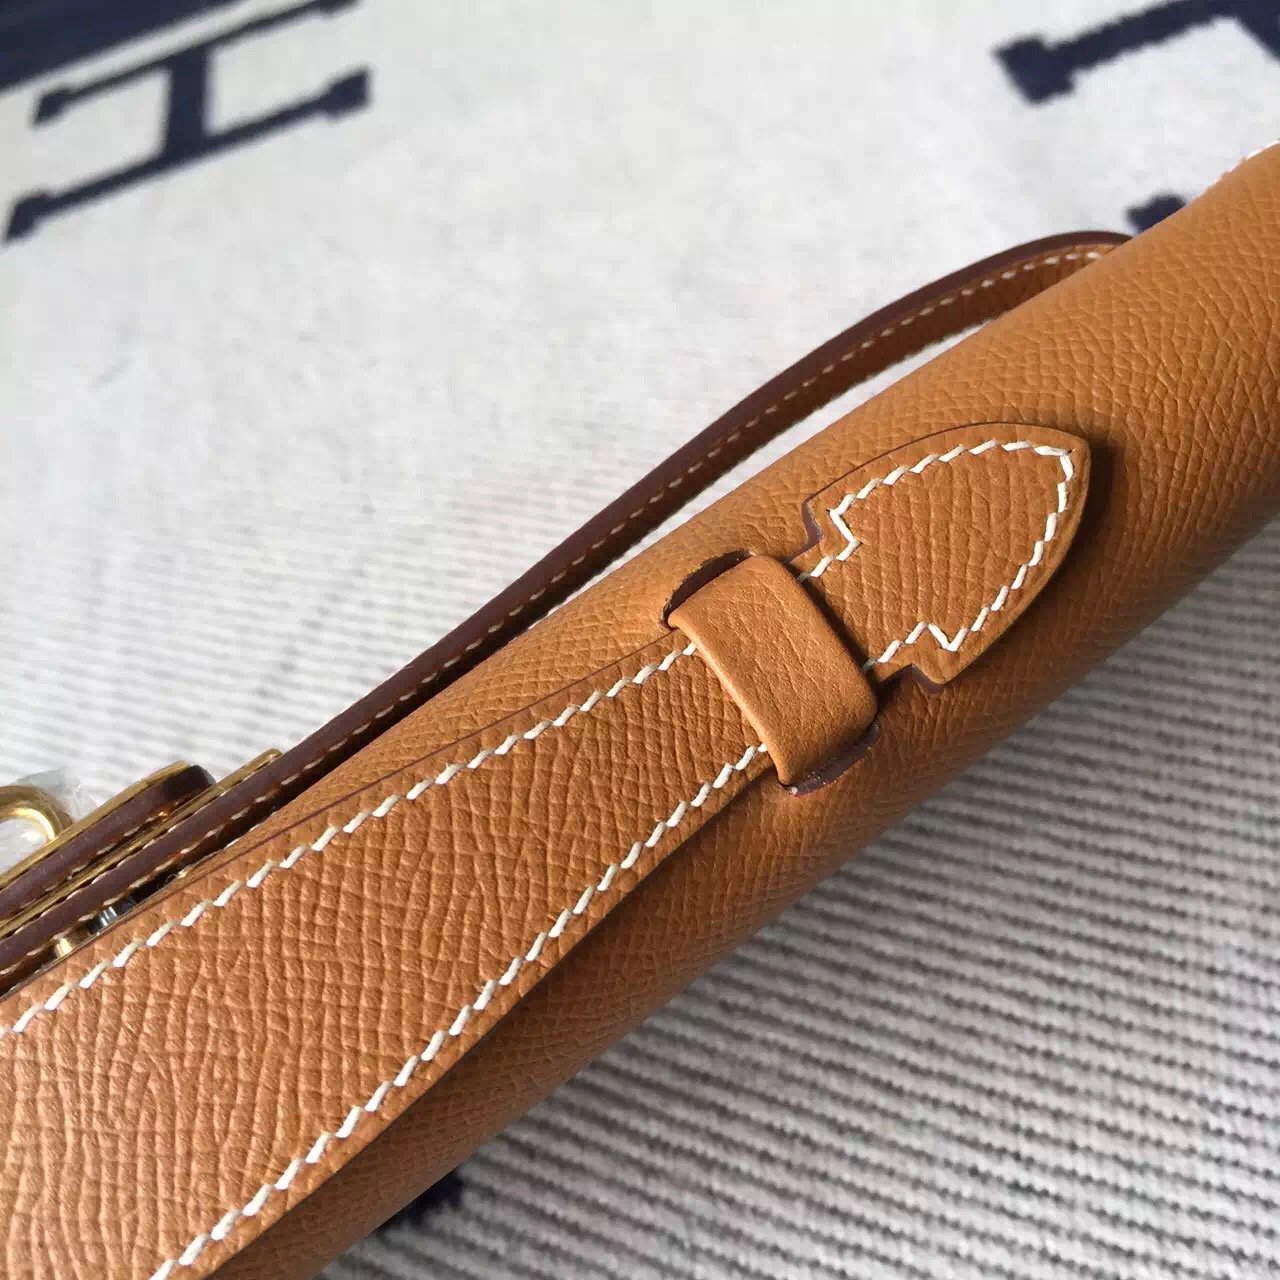 Luxury Hermes CK37 Gold Epsom Leather Kelly Cut Clutch Bag 31cm